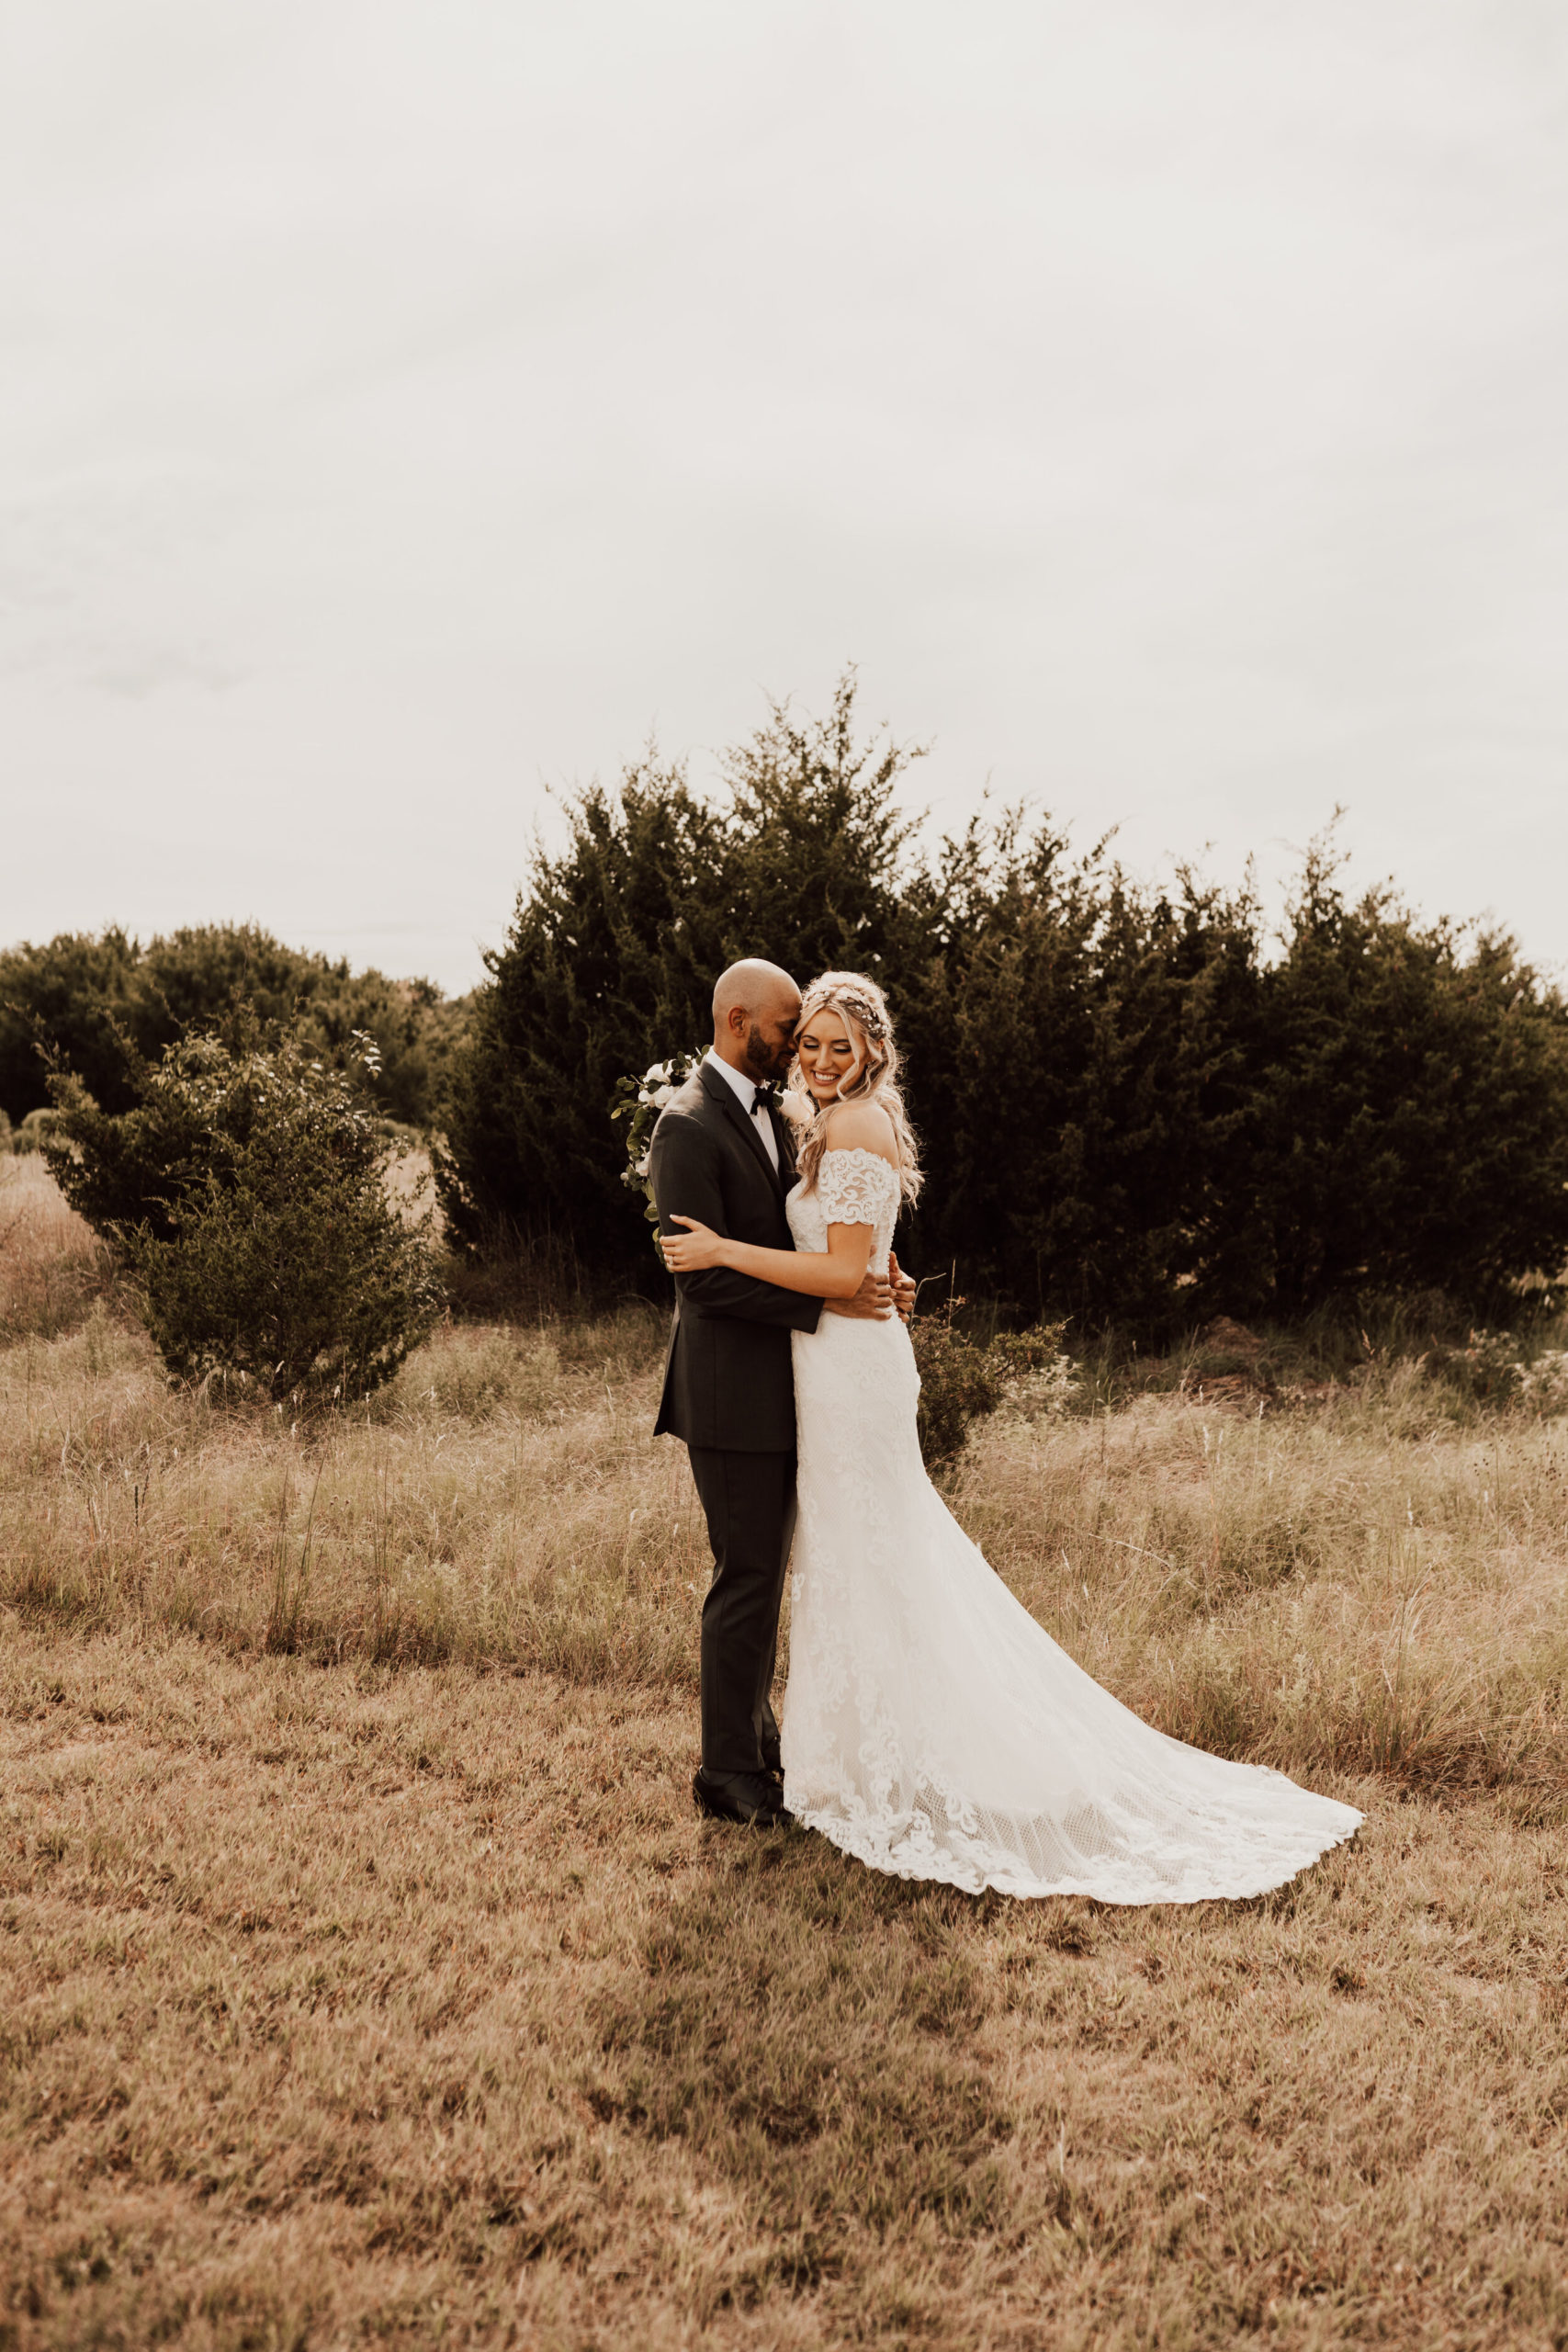 Hayley + Lorenzo - Summer White Chapel Wedding at Stone Hill Barn in Augusta, Kansas105.jpg